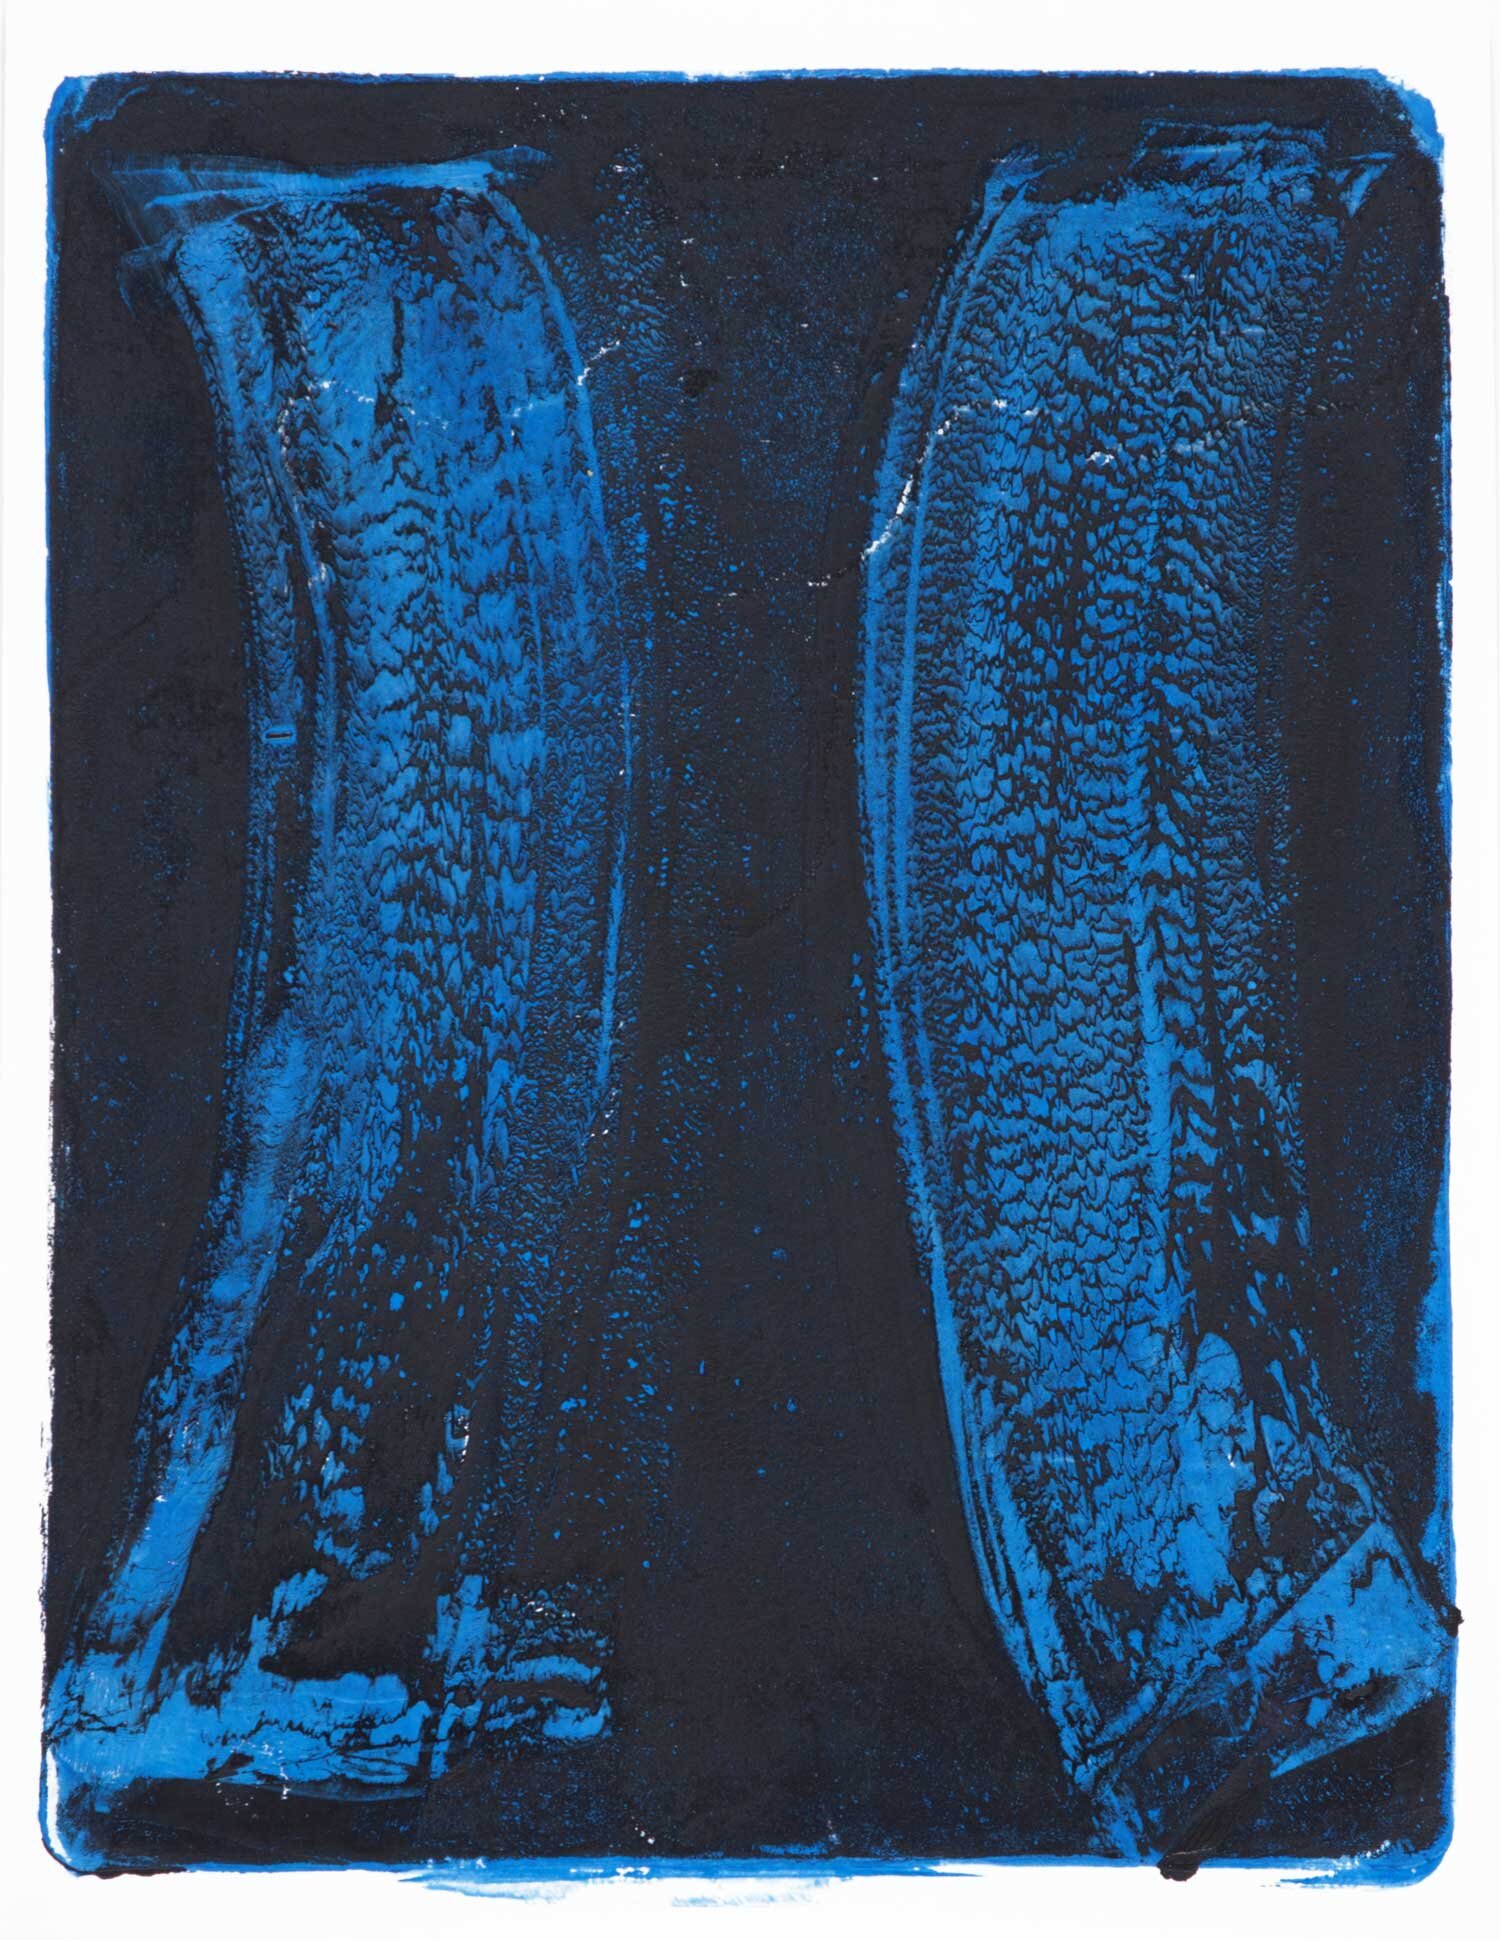  Blue Arcs 6, 2016 Monotype 11 x 8.5 in  Available through Artmobia:  https://www.artmobia.com/artist/anne-russinof  